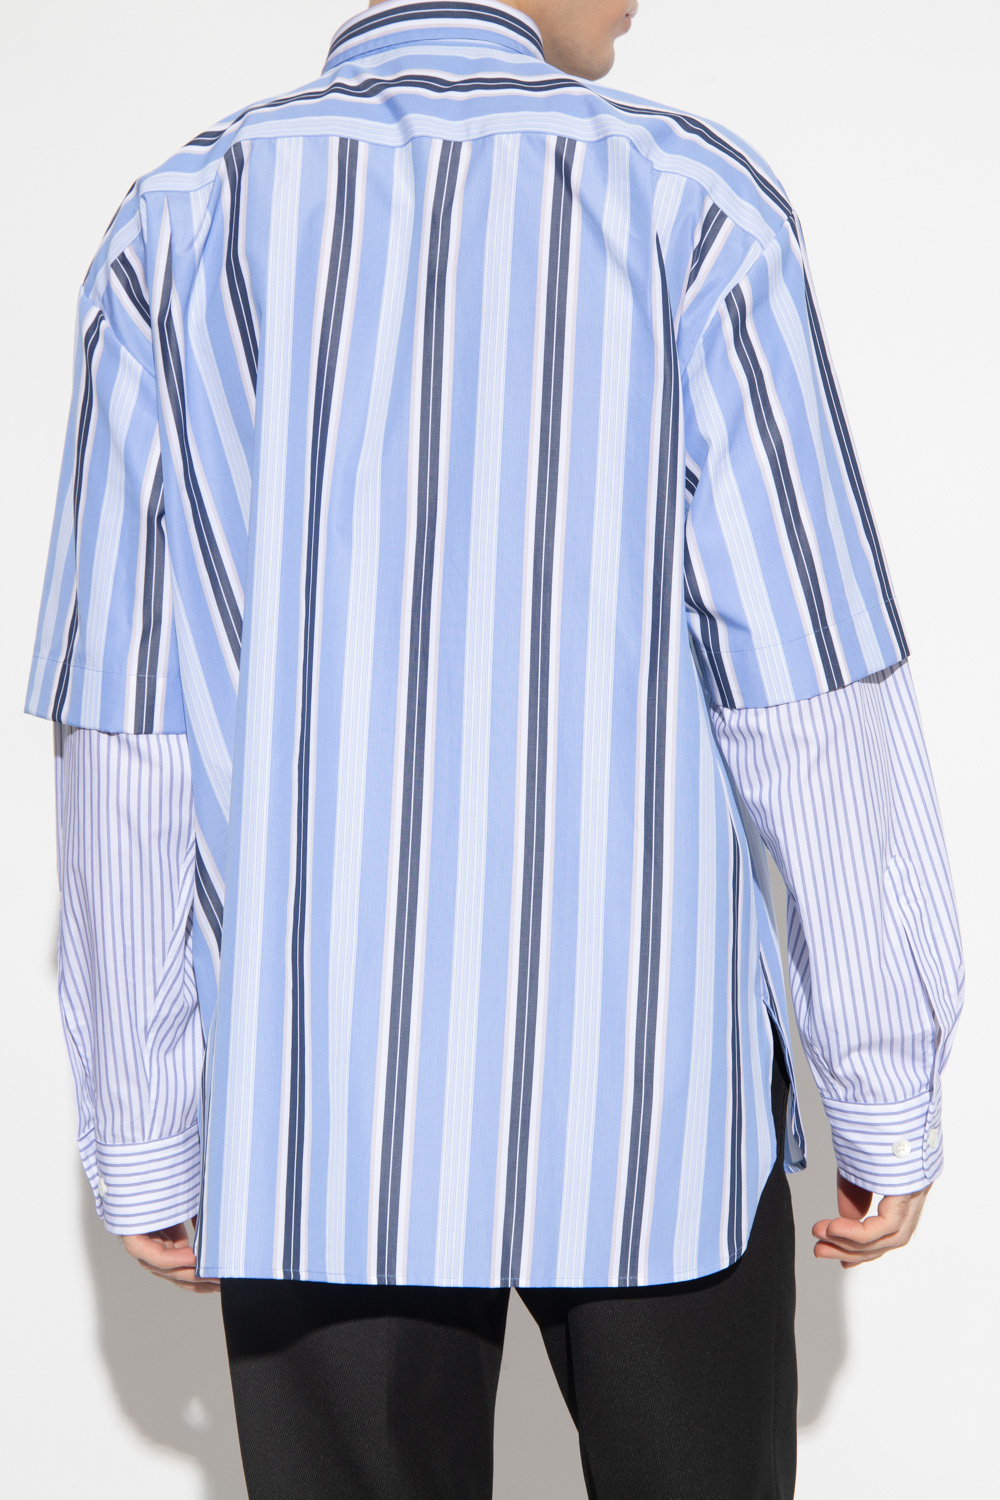 Dries Van Noten Striped shirt | Men's Clothing | Vitkac